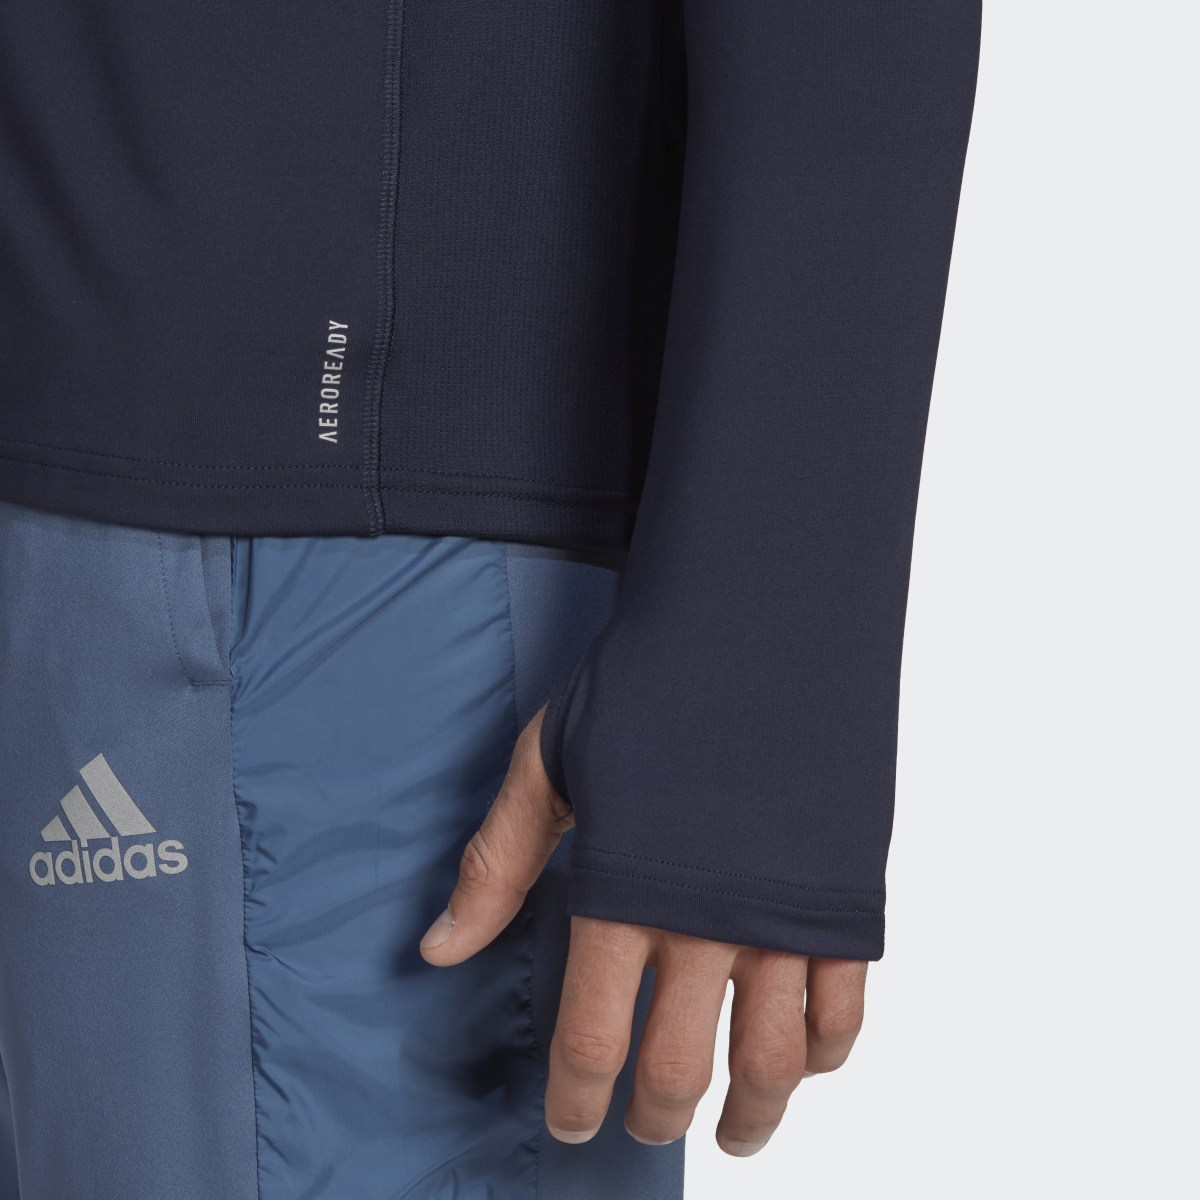 Adidas Own The Run 1/2 Zip Long Sleeve Tee. 6